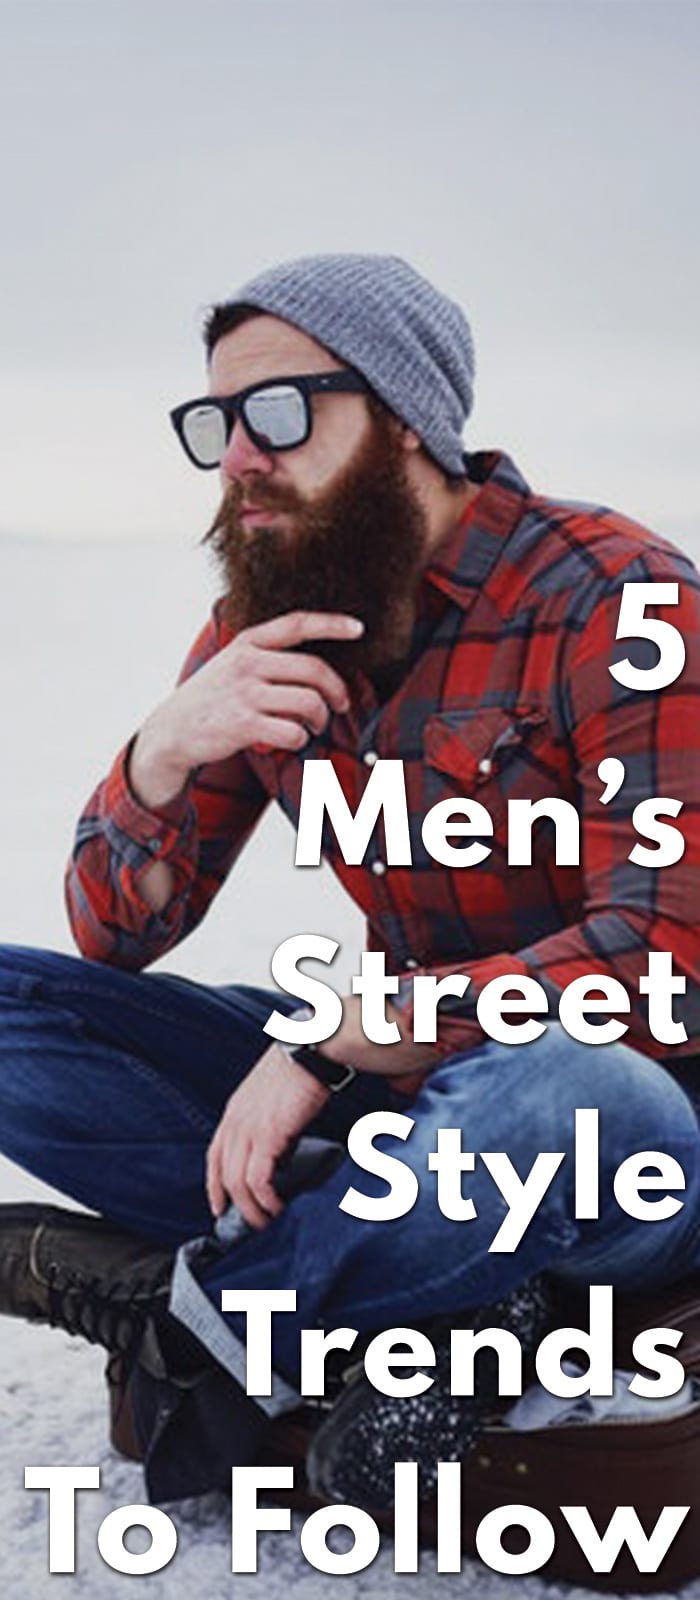 5 Men’s Street Style Trends